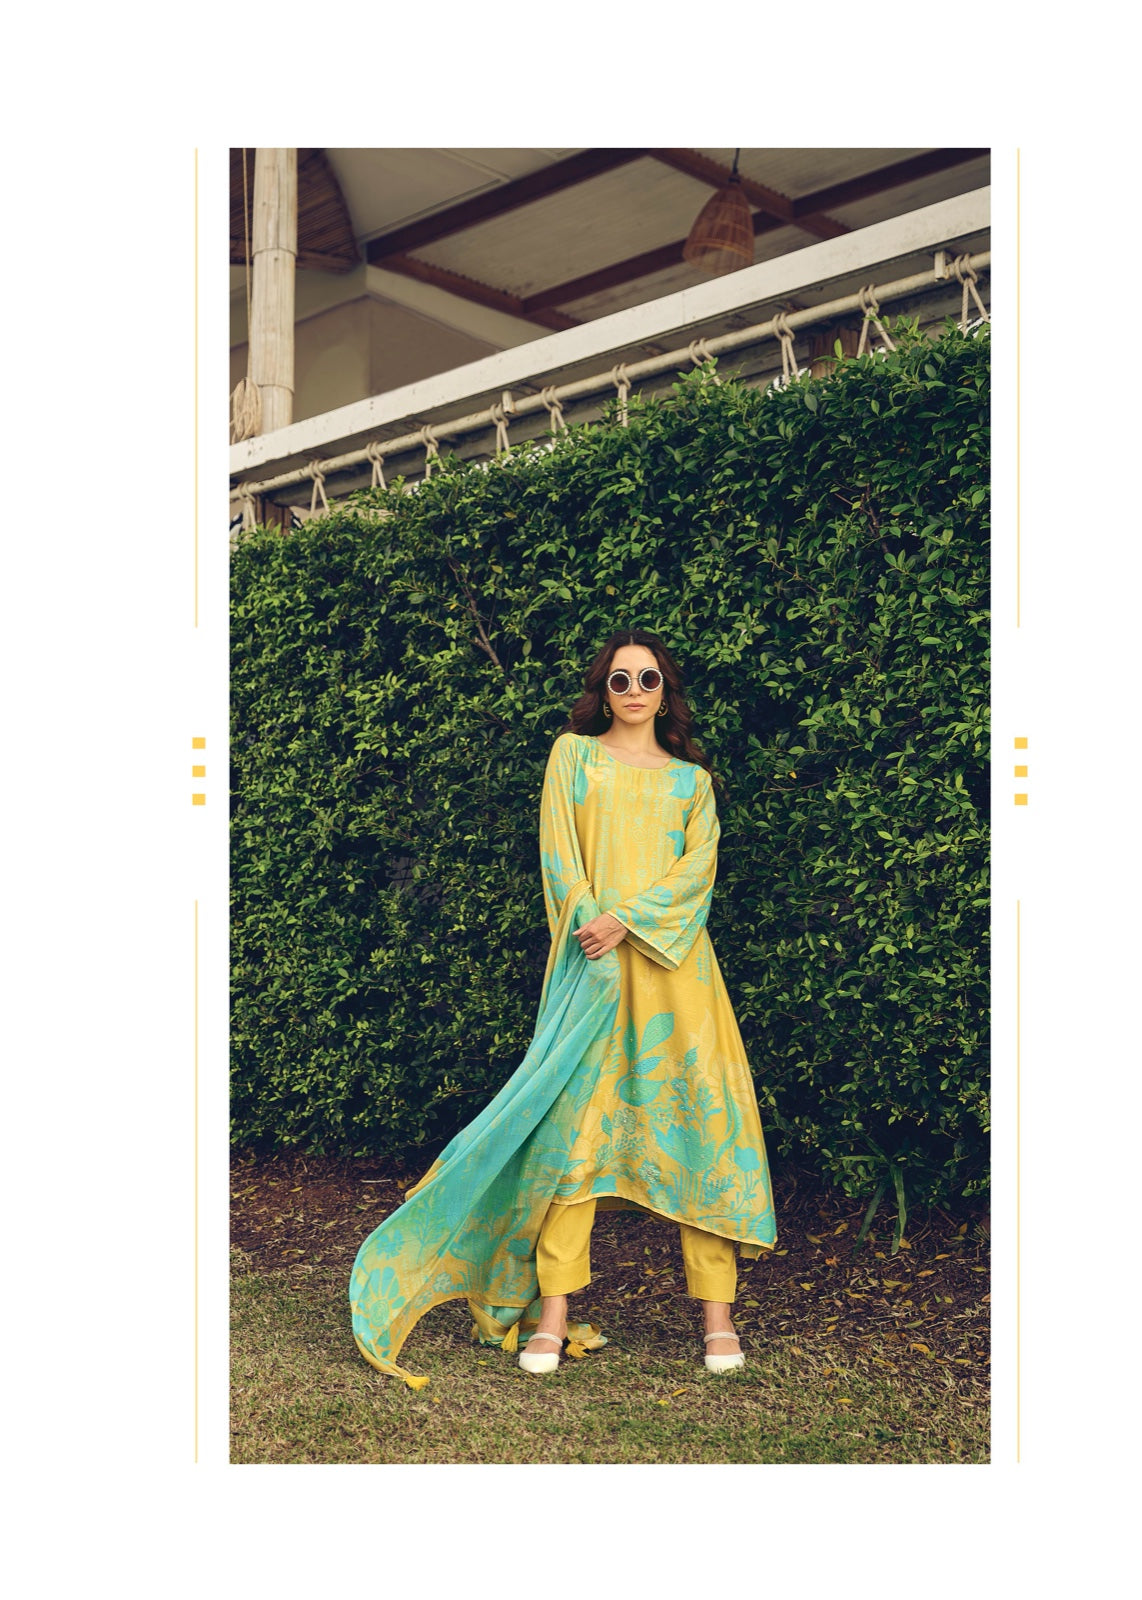 Kavleen Sadhana Muslin Silk Pant Style Suits